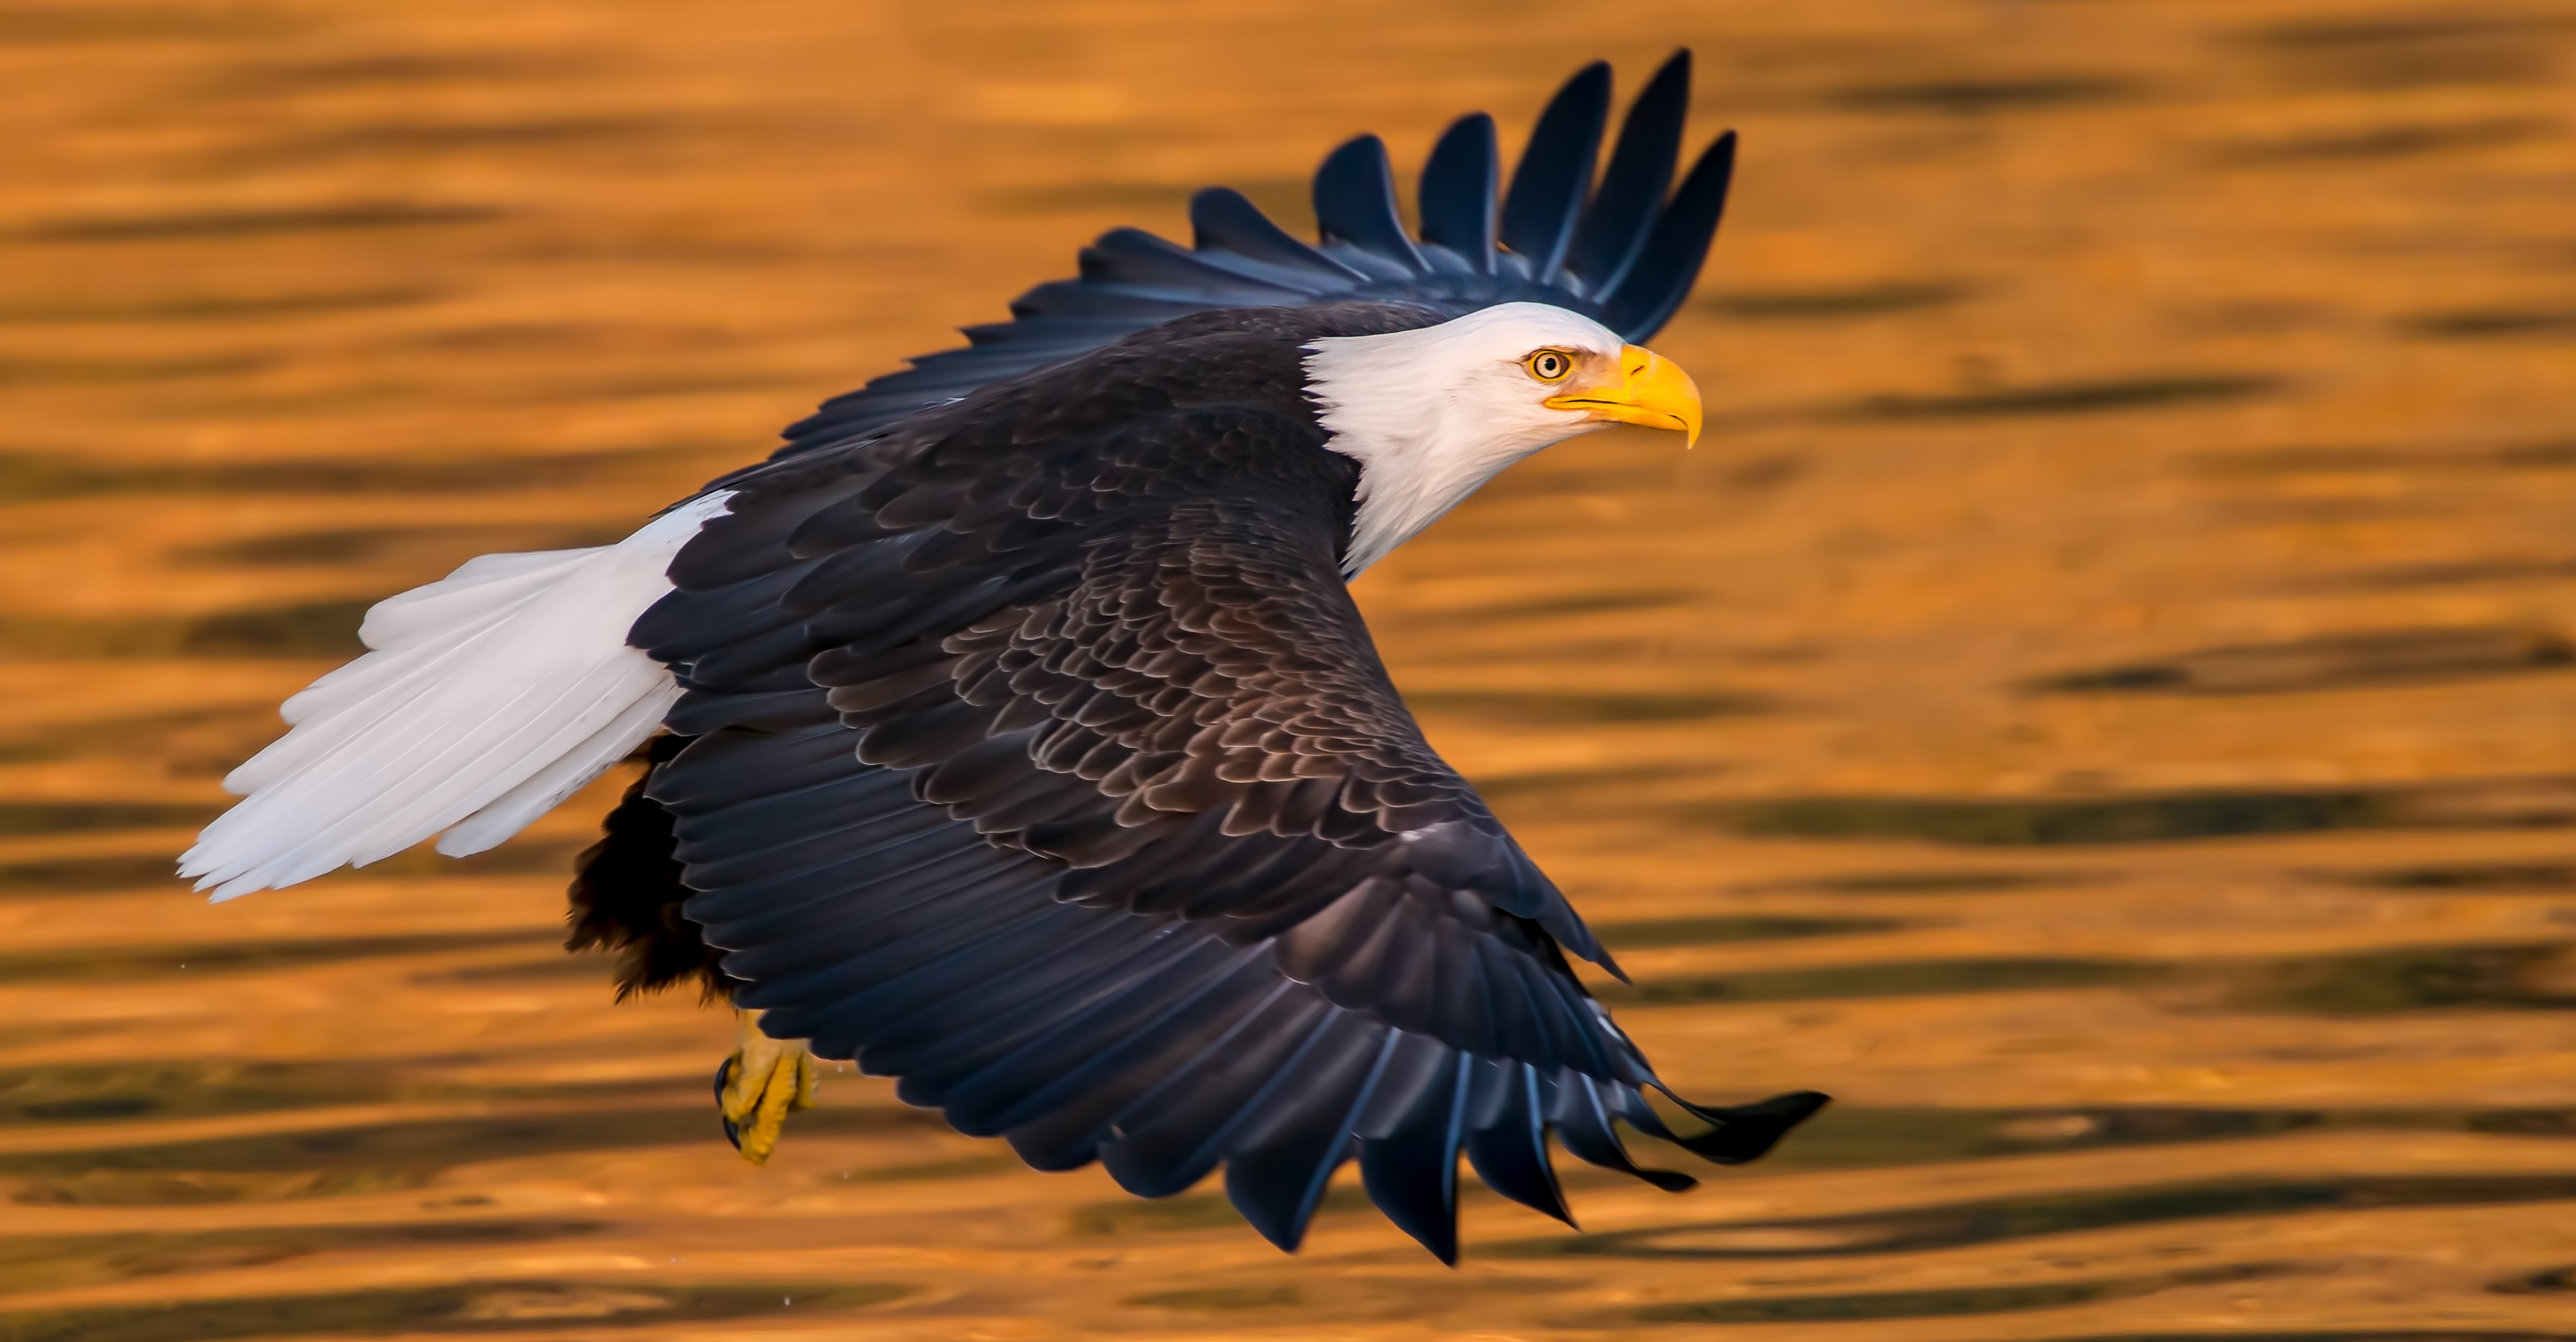 An American bald eagle flies over the water at sunset, Alaska, USA